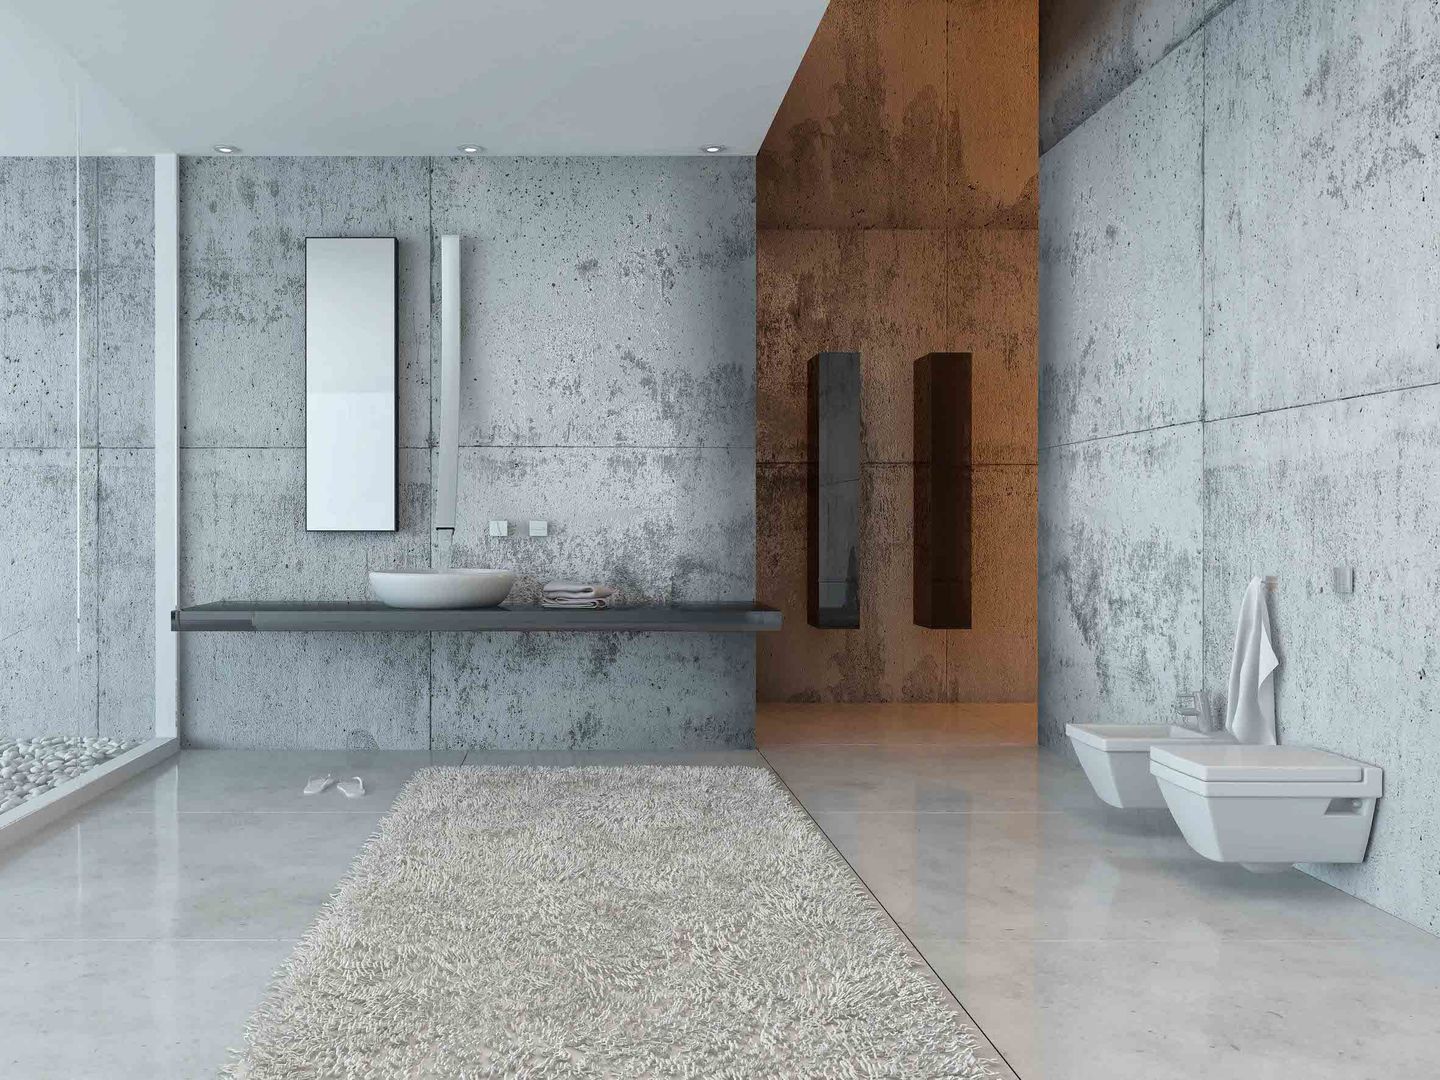 beton im bad i modernes gestaltungselement - badezimmer